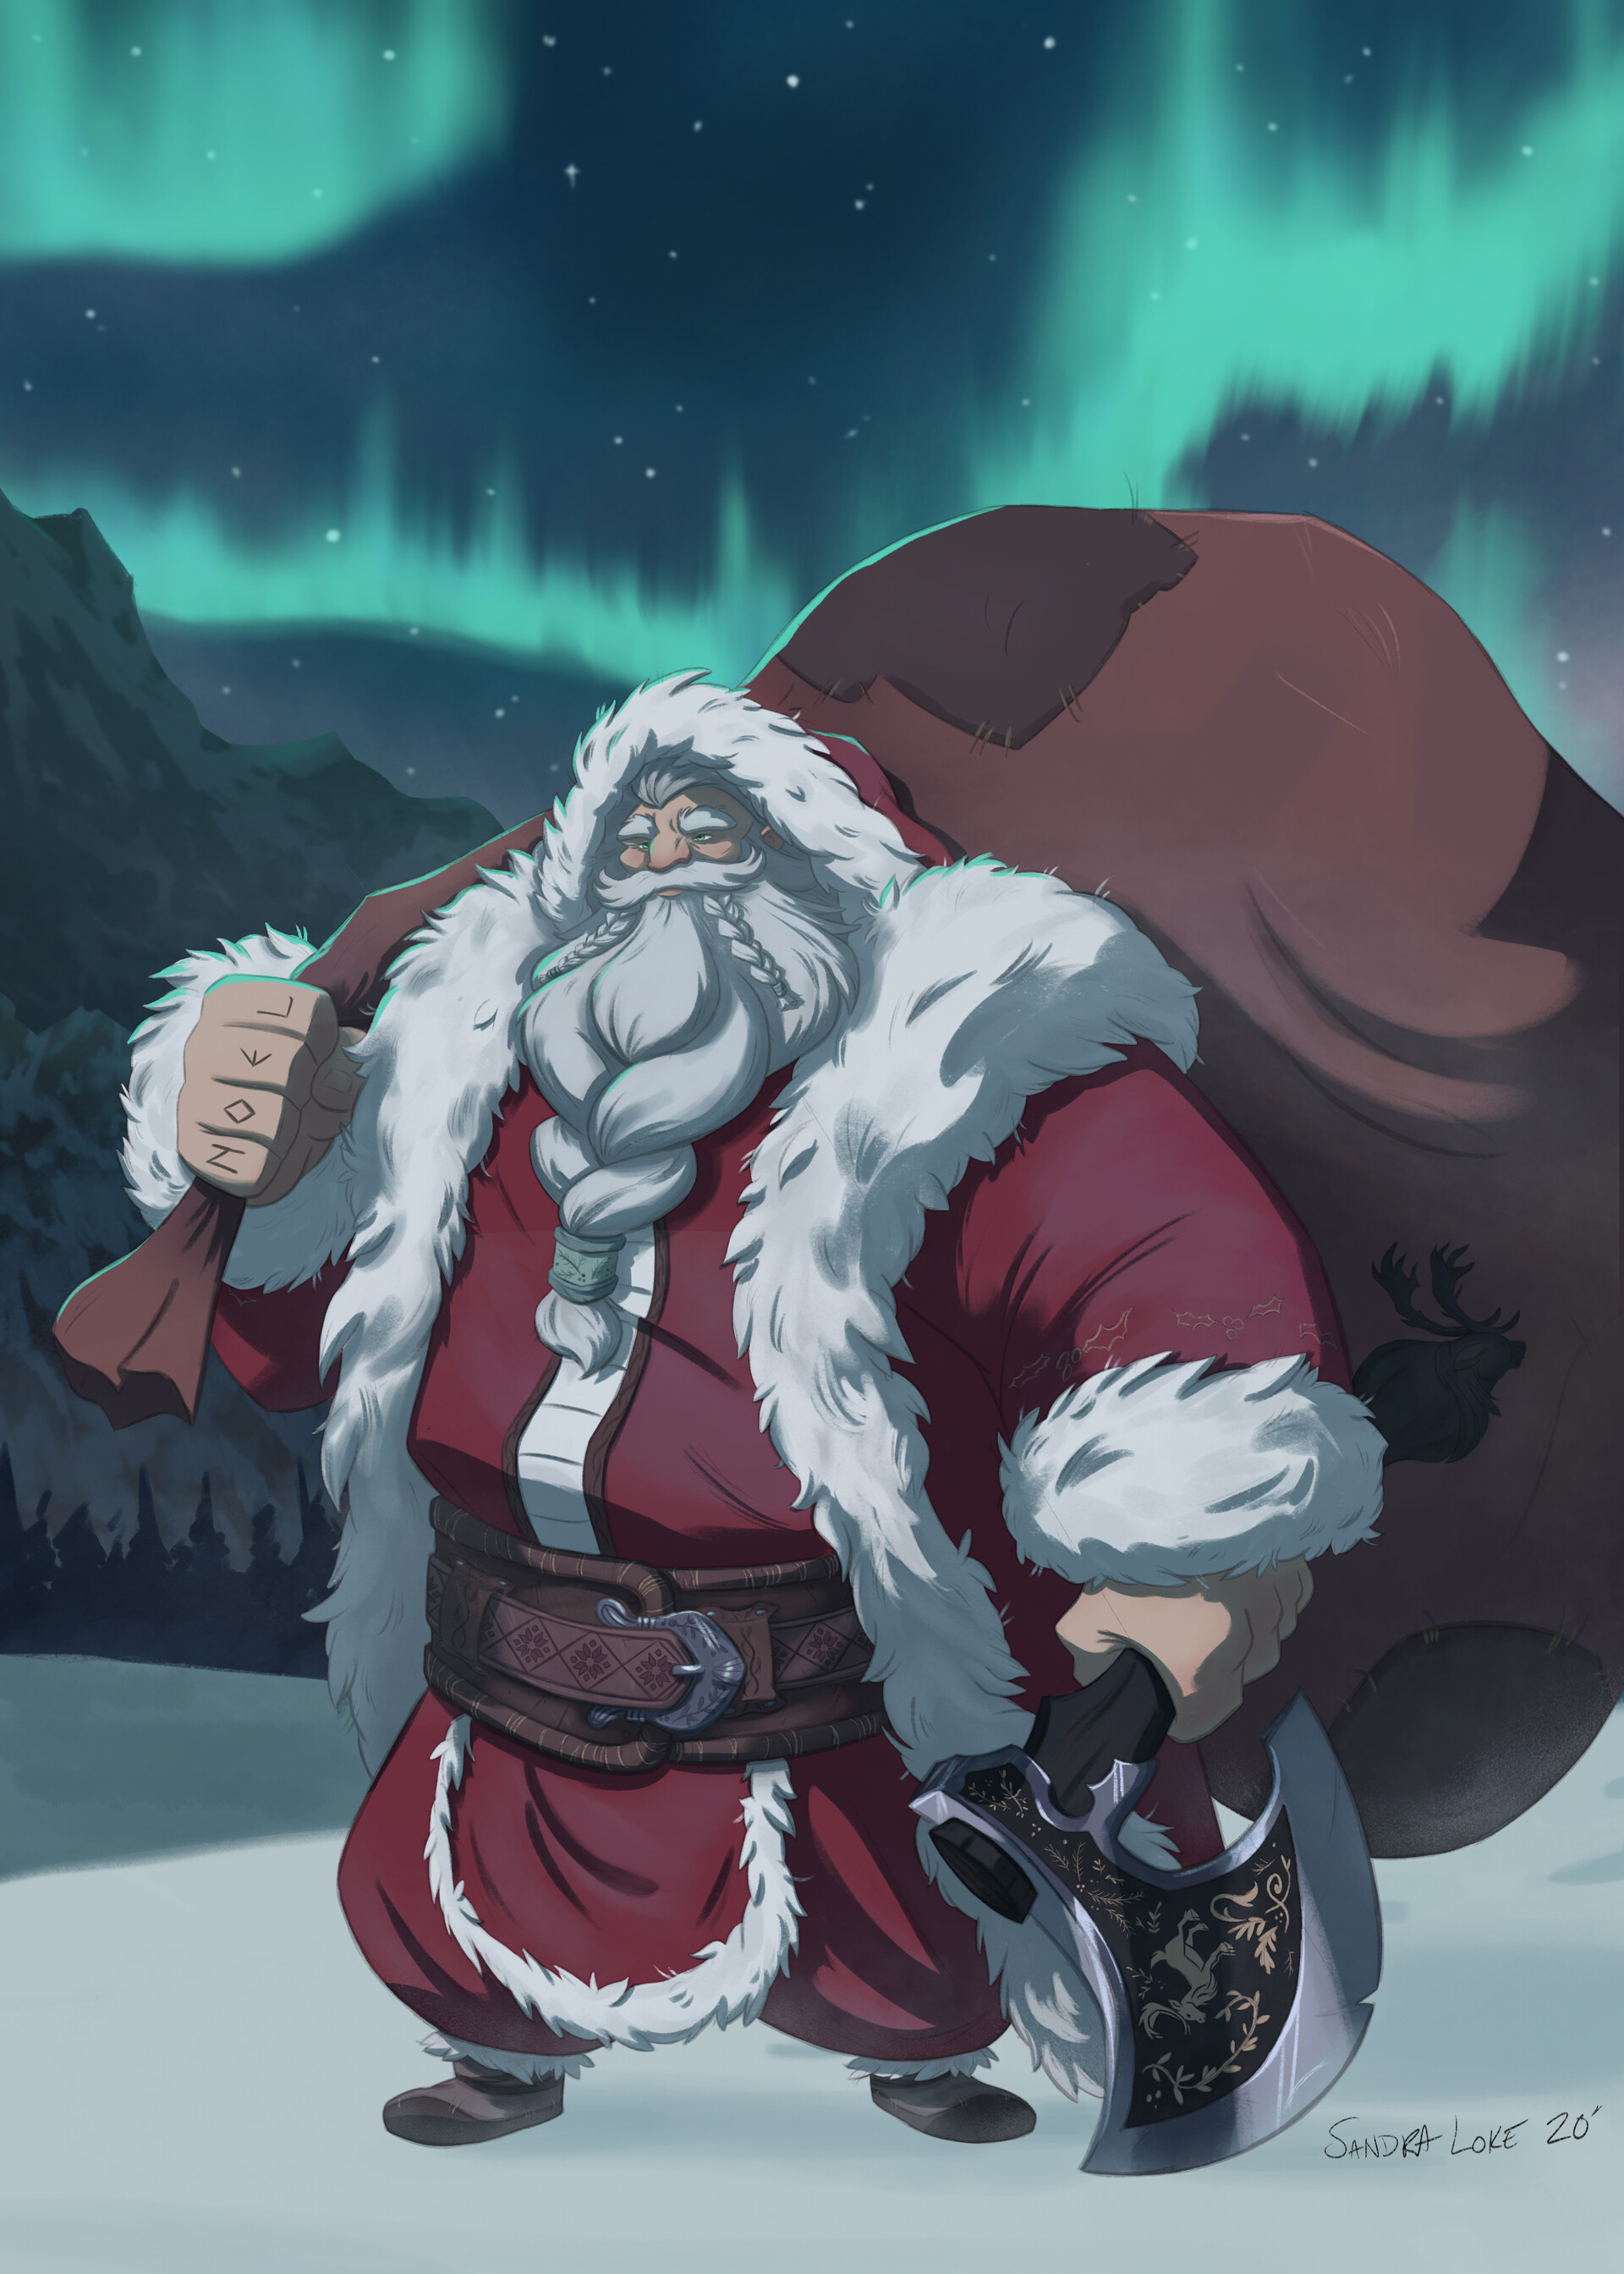 Santa Viking by Sandra Hill